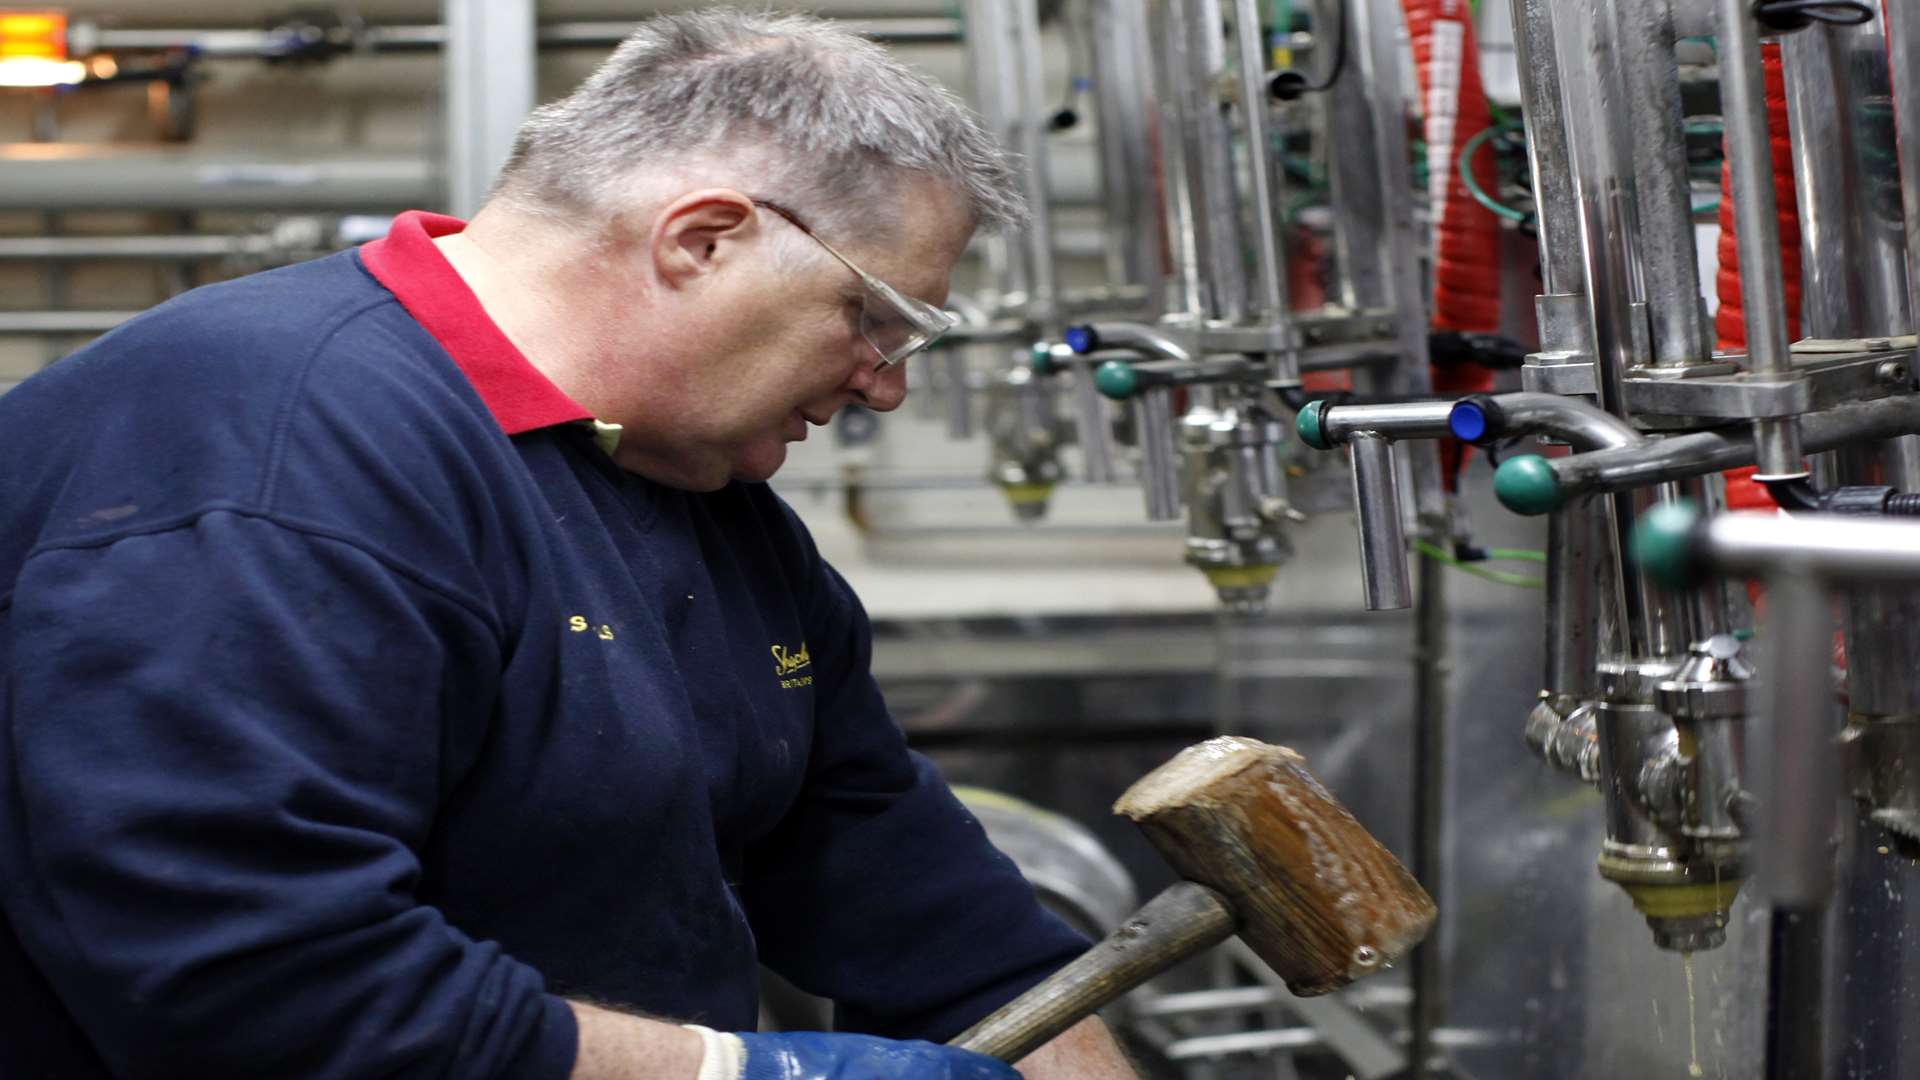 Cask production operative Steve Wills seals the casks